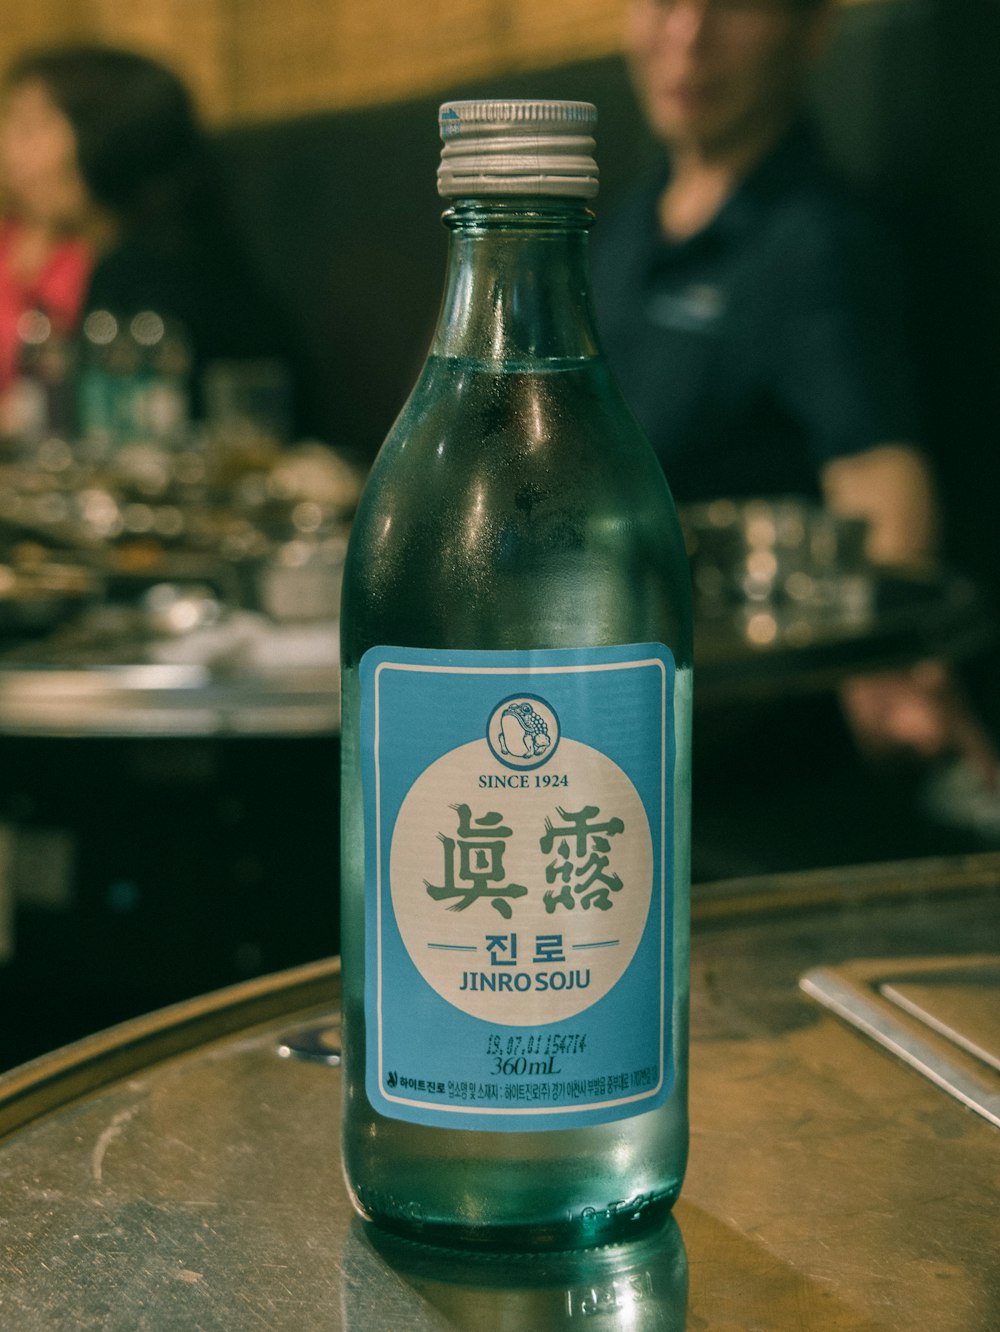 Jinro Soju Bottle On Table Photo Free Human Image On Unsplash